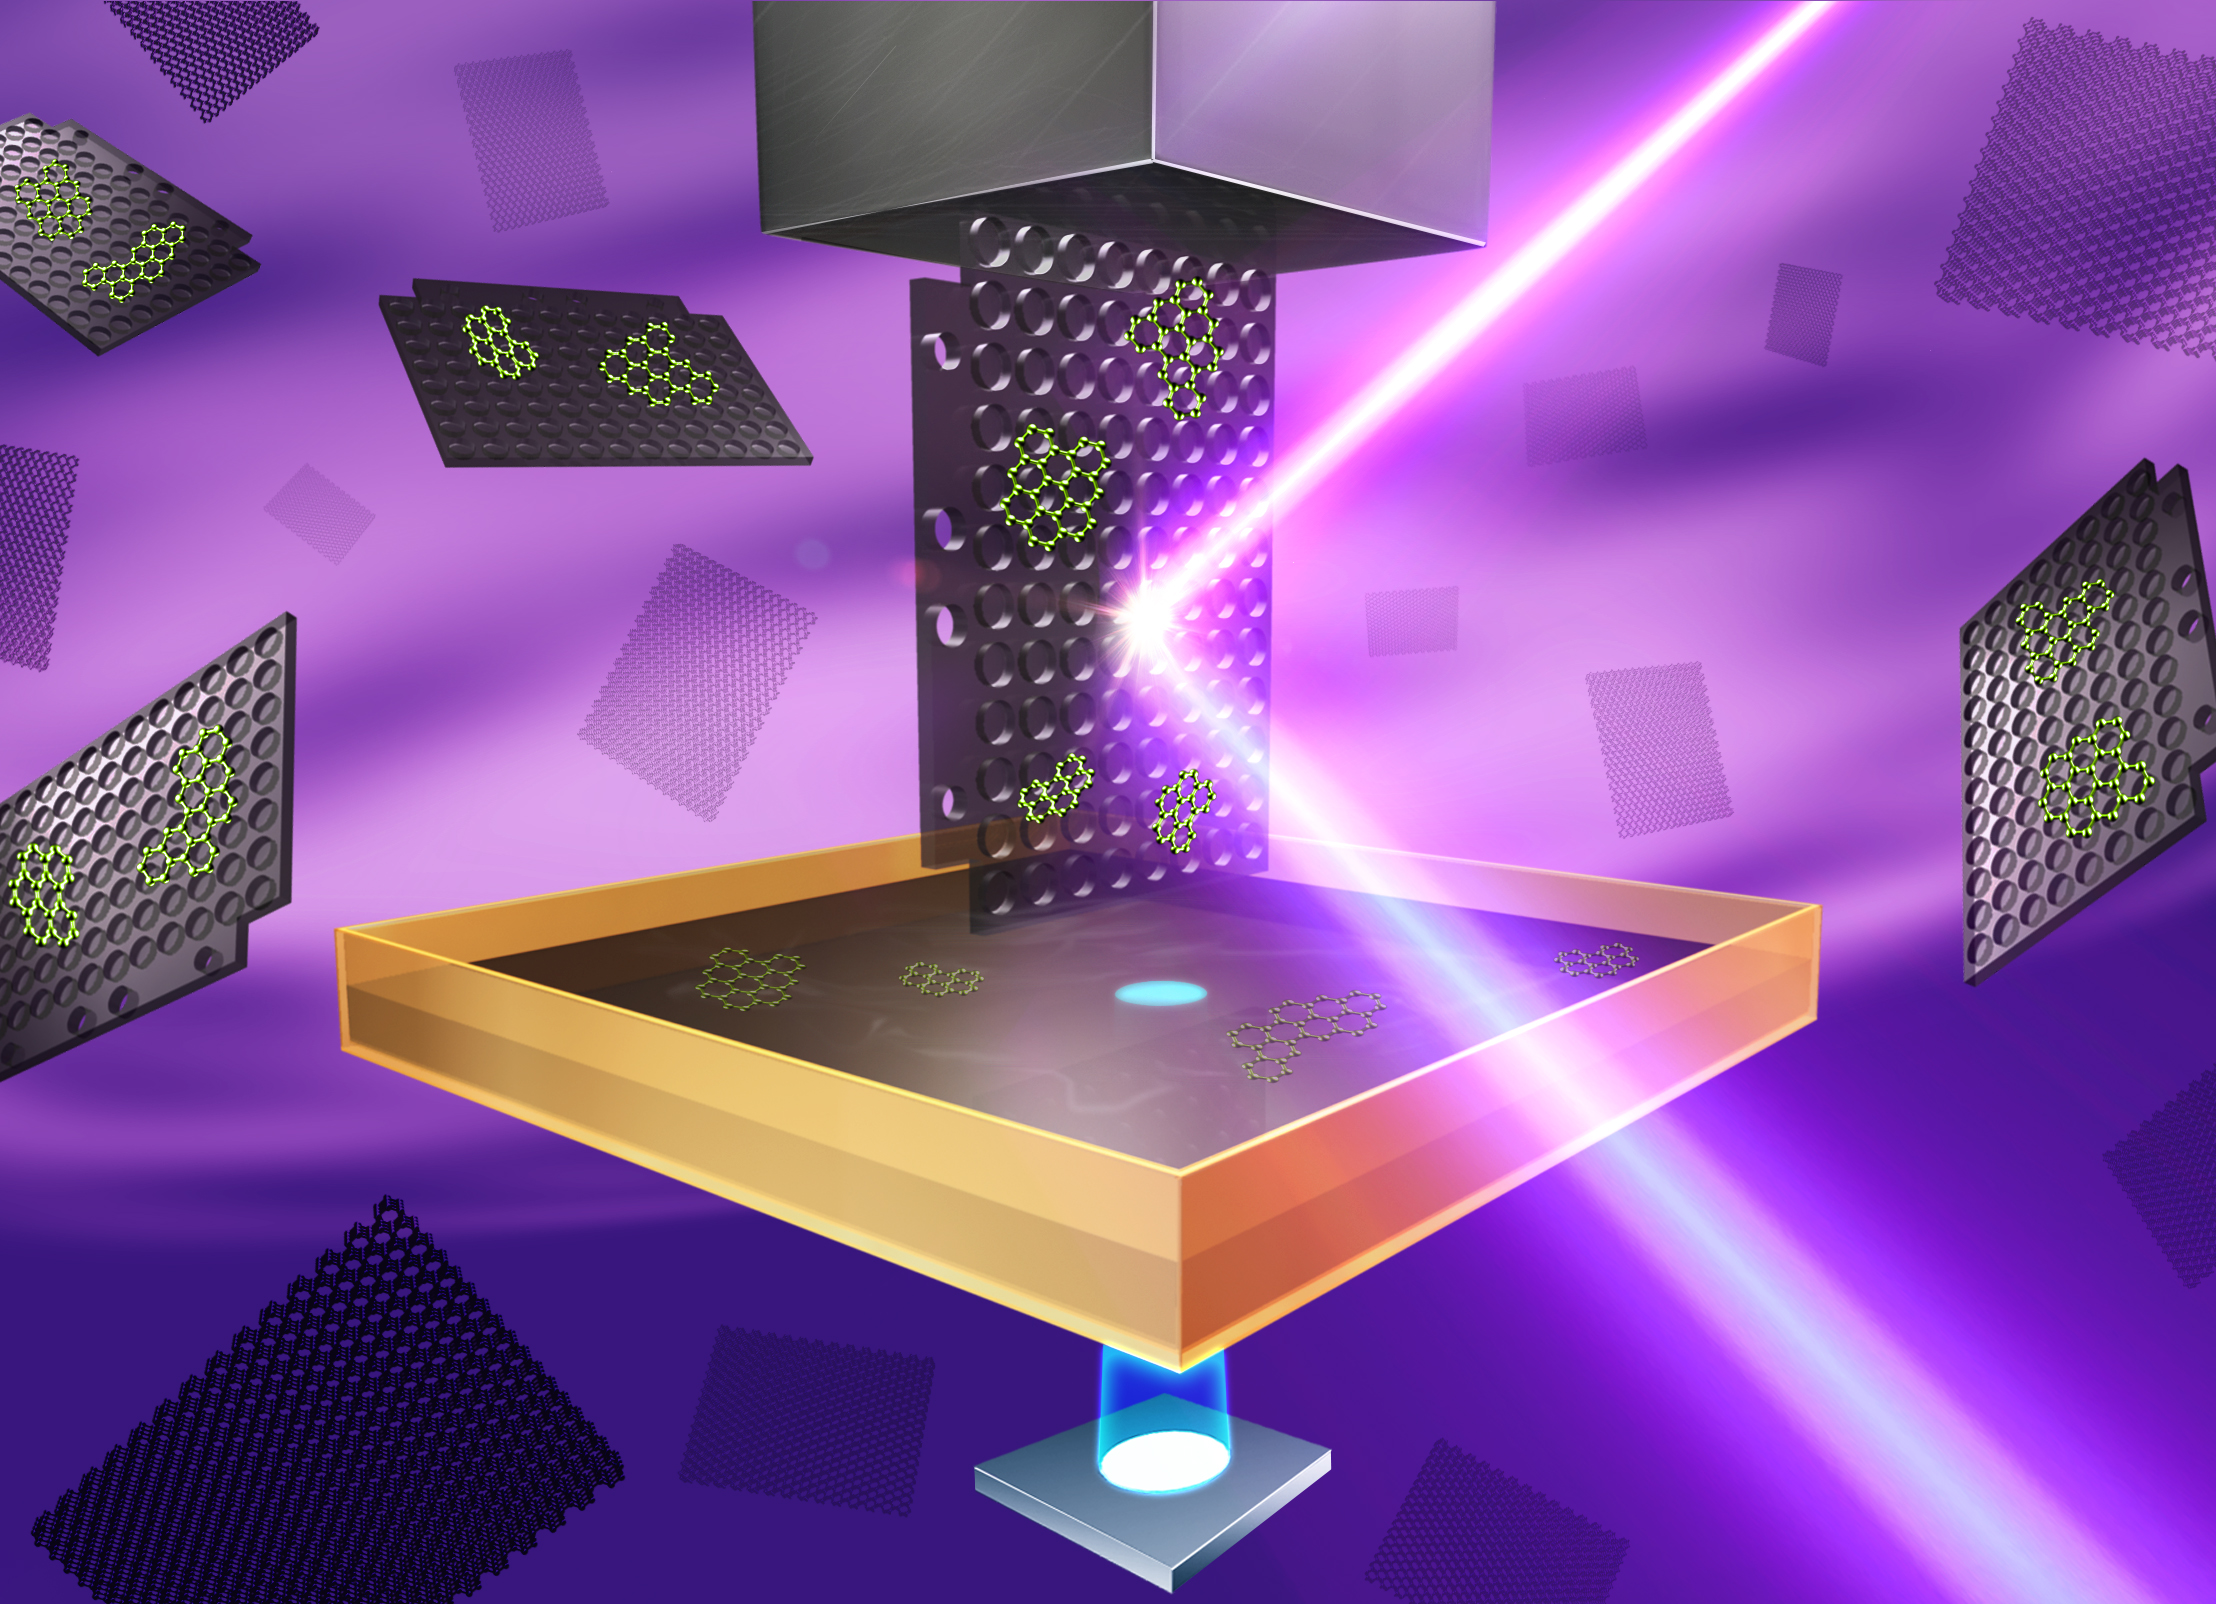 3D Printing of graphene-doped target for “matrix-free” laser desorption/ionization mass spectrometry